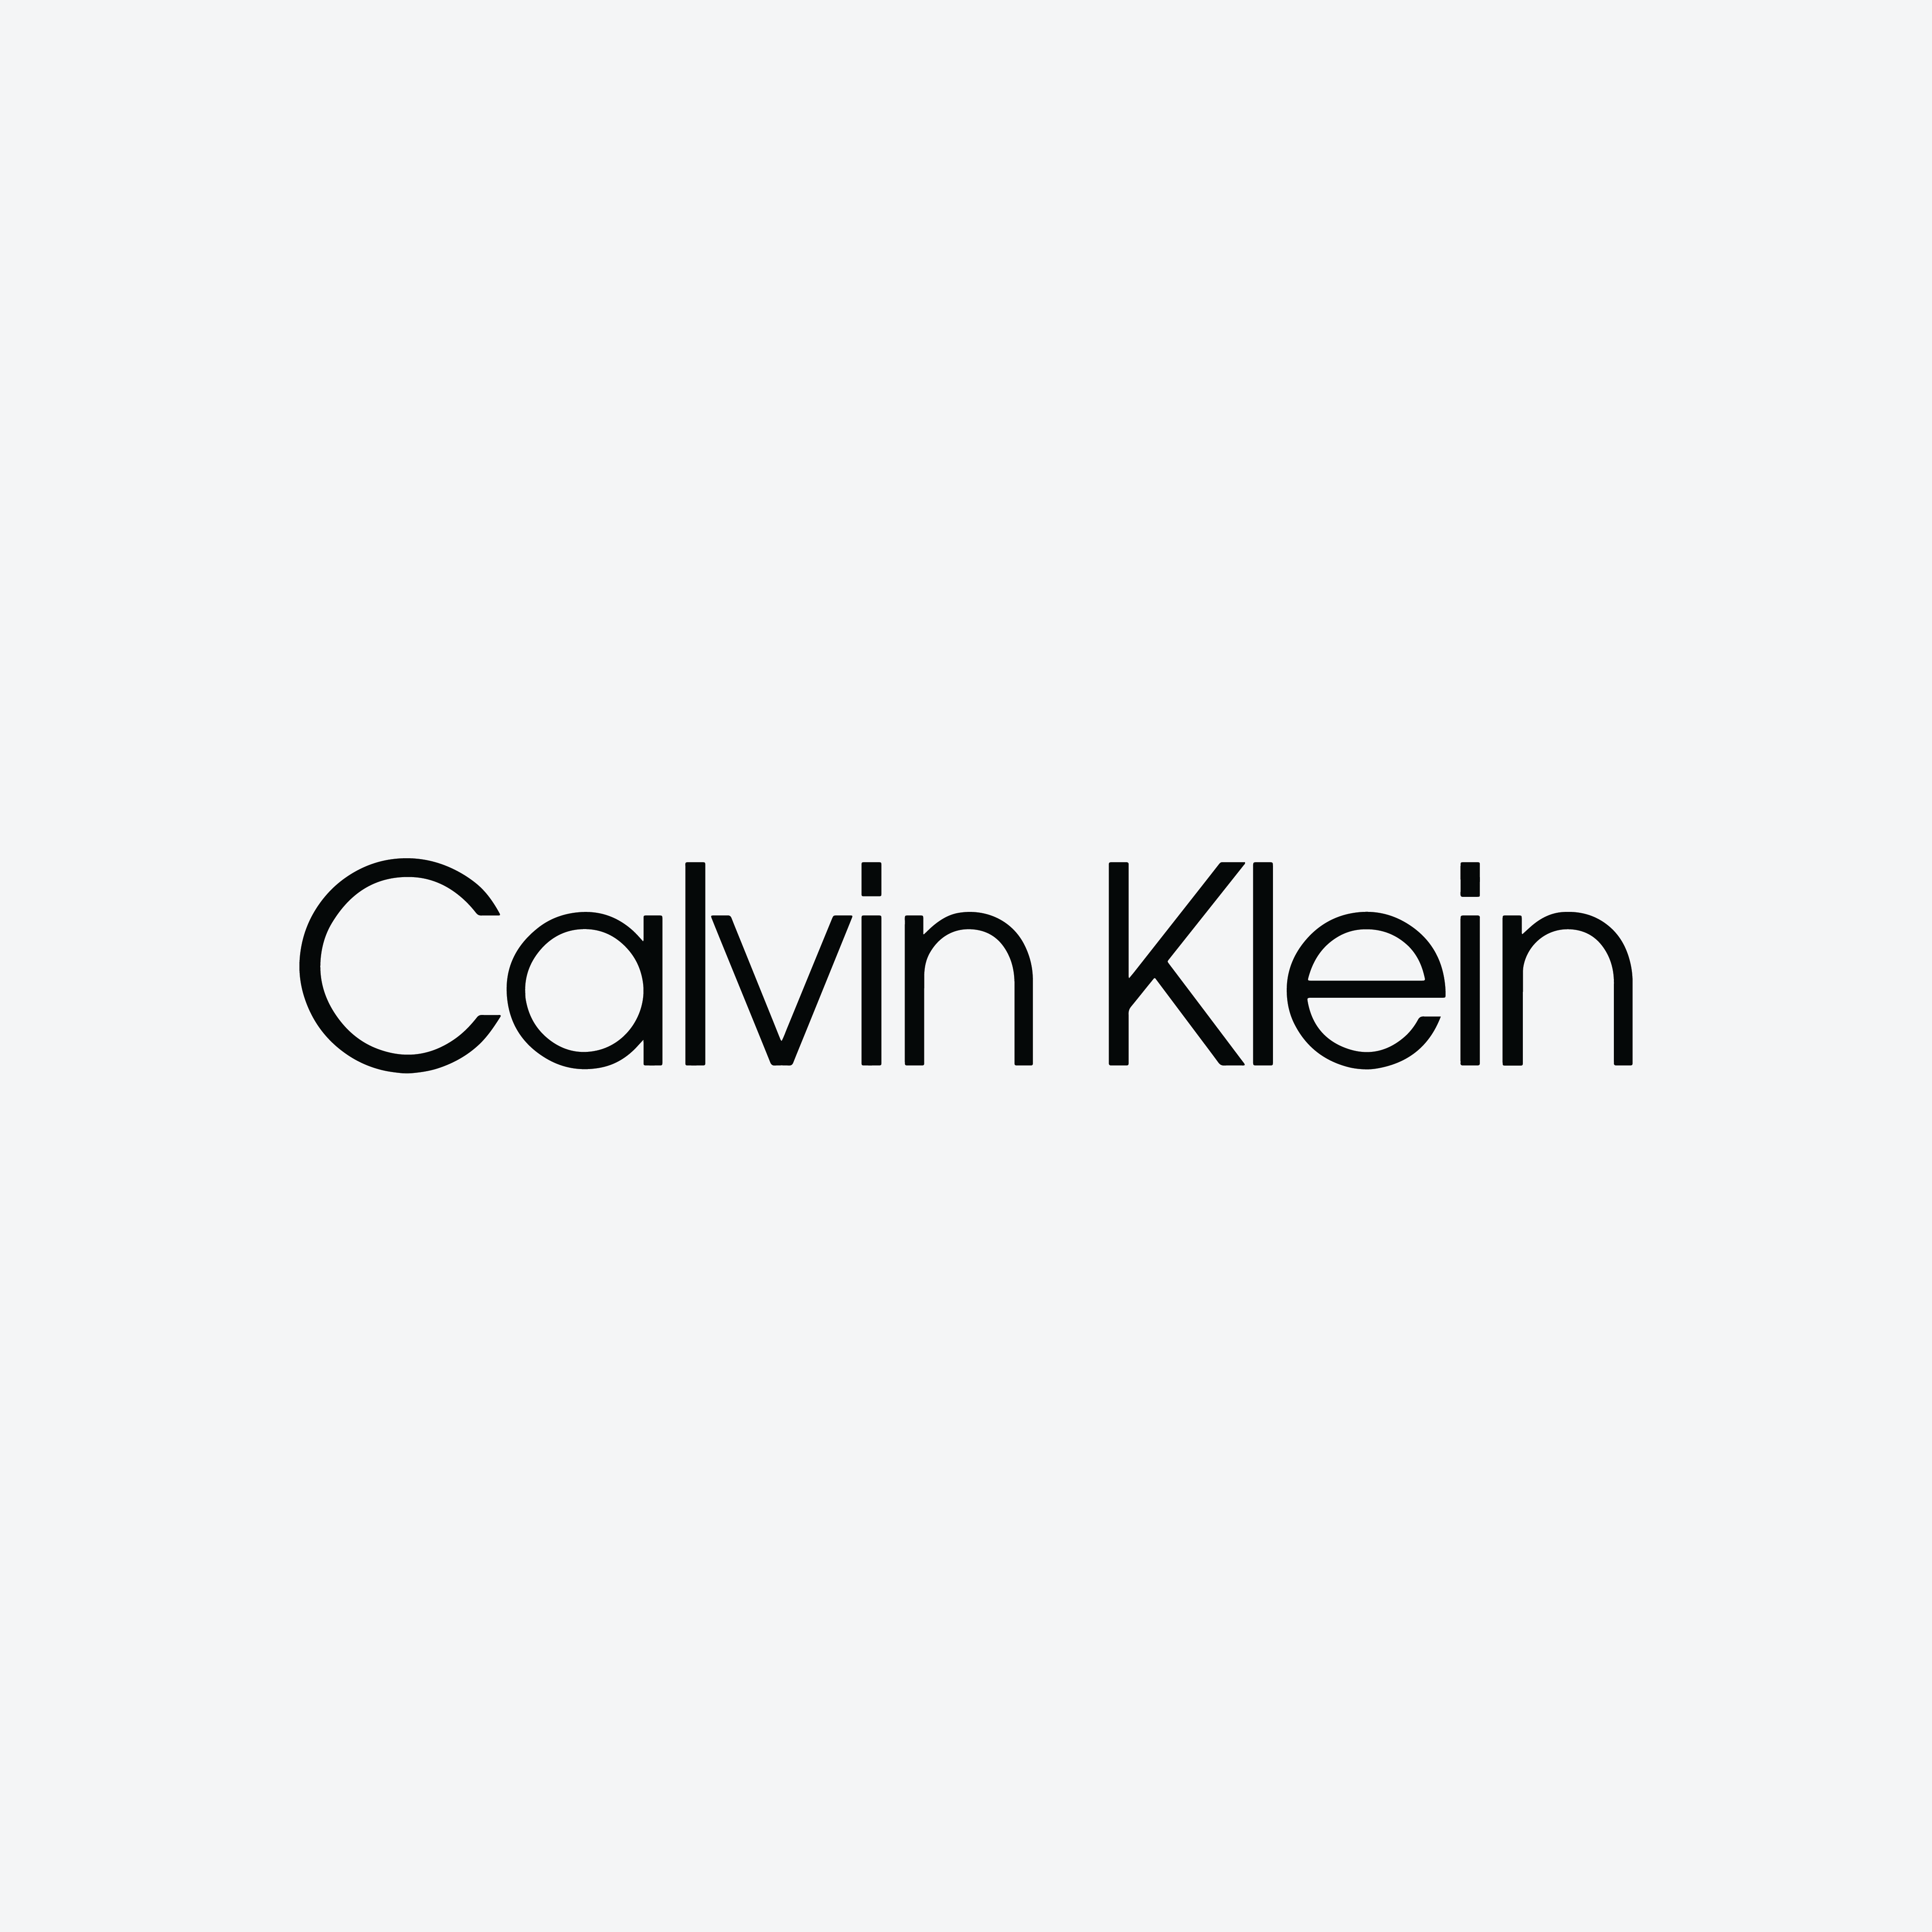 CALVIN KLEIN | CENTRAL PARK MALL JAKARTA